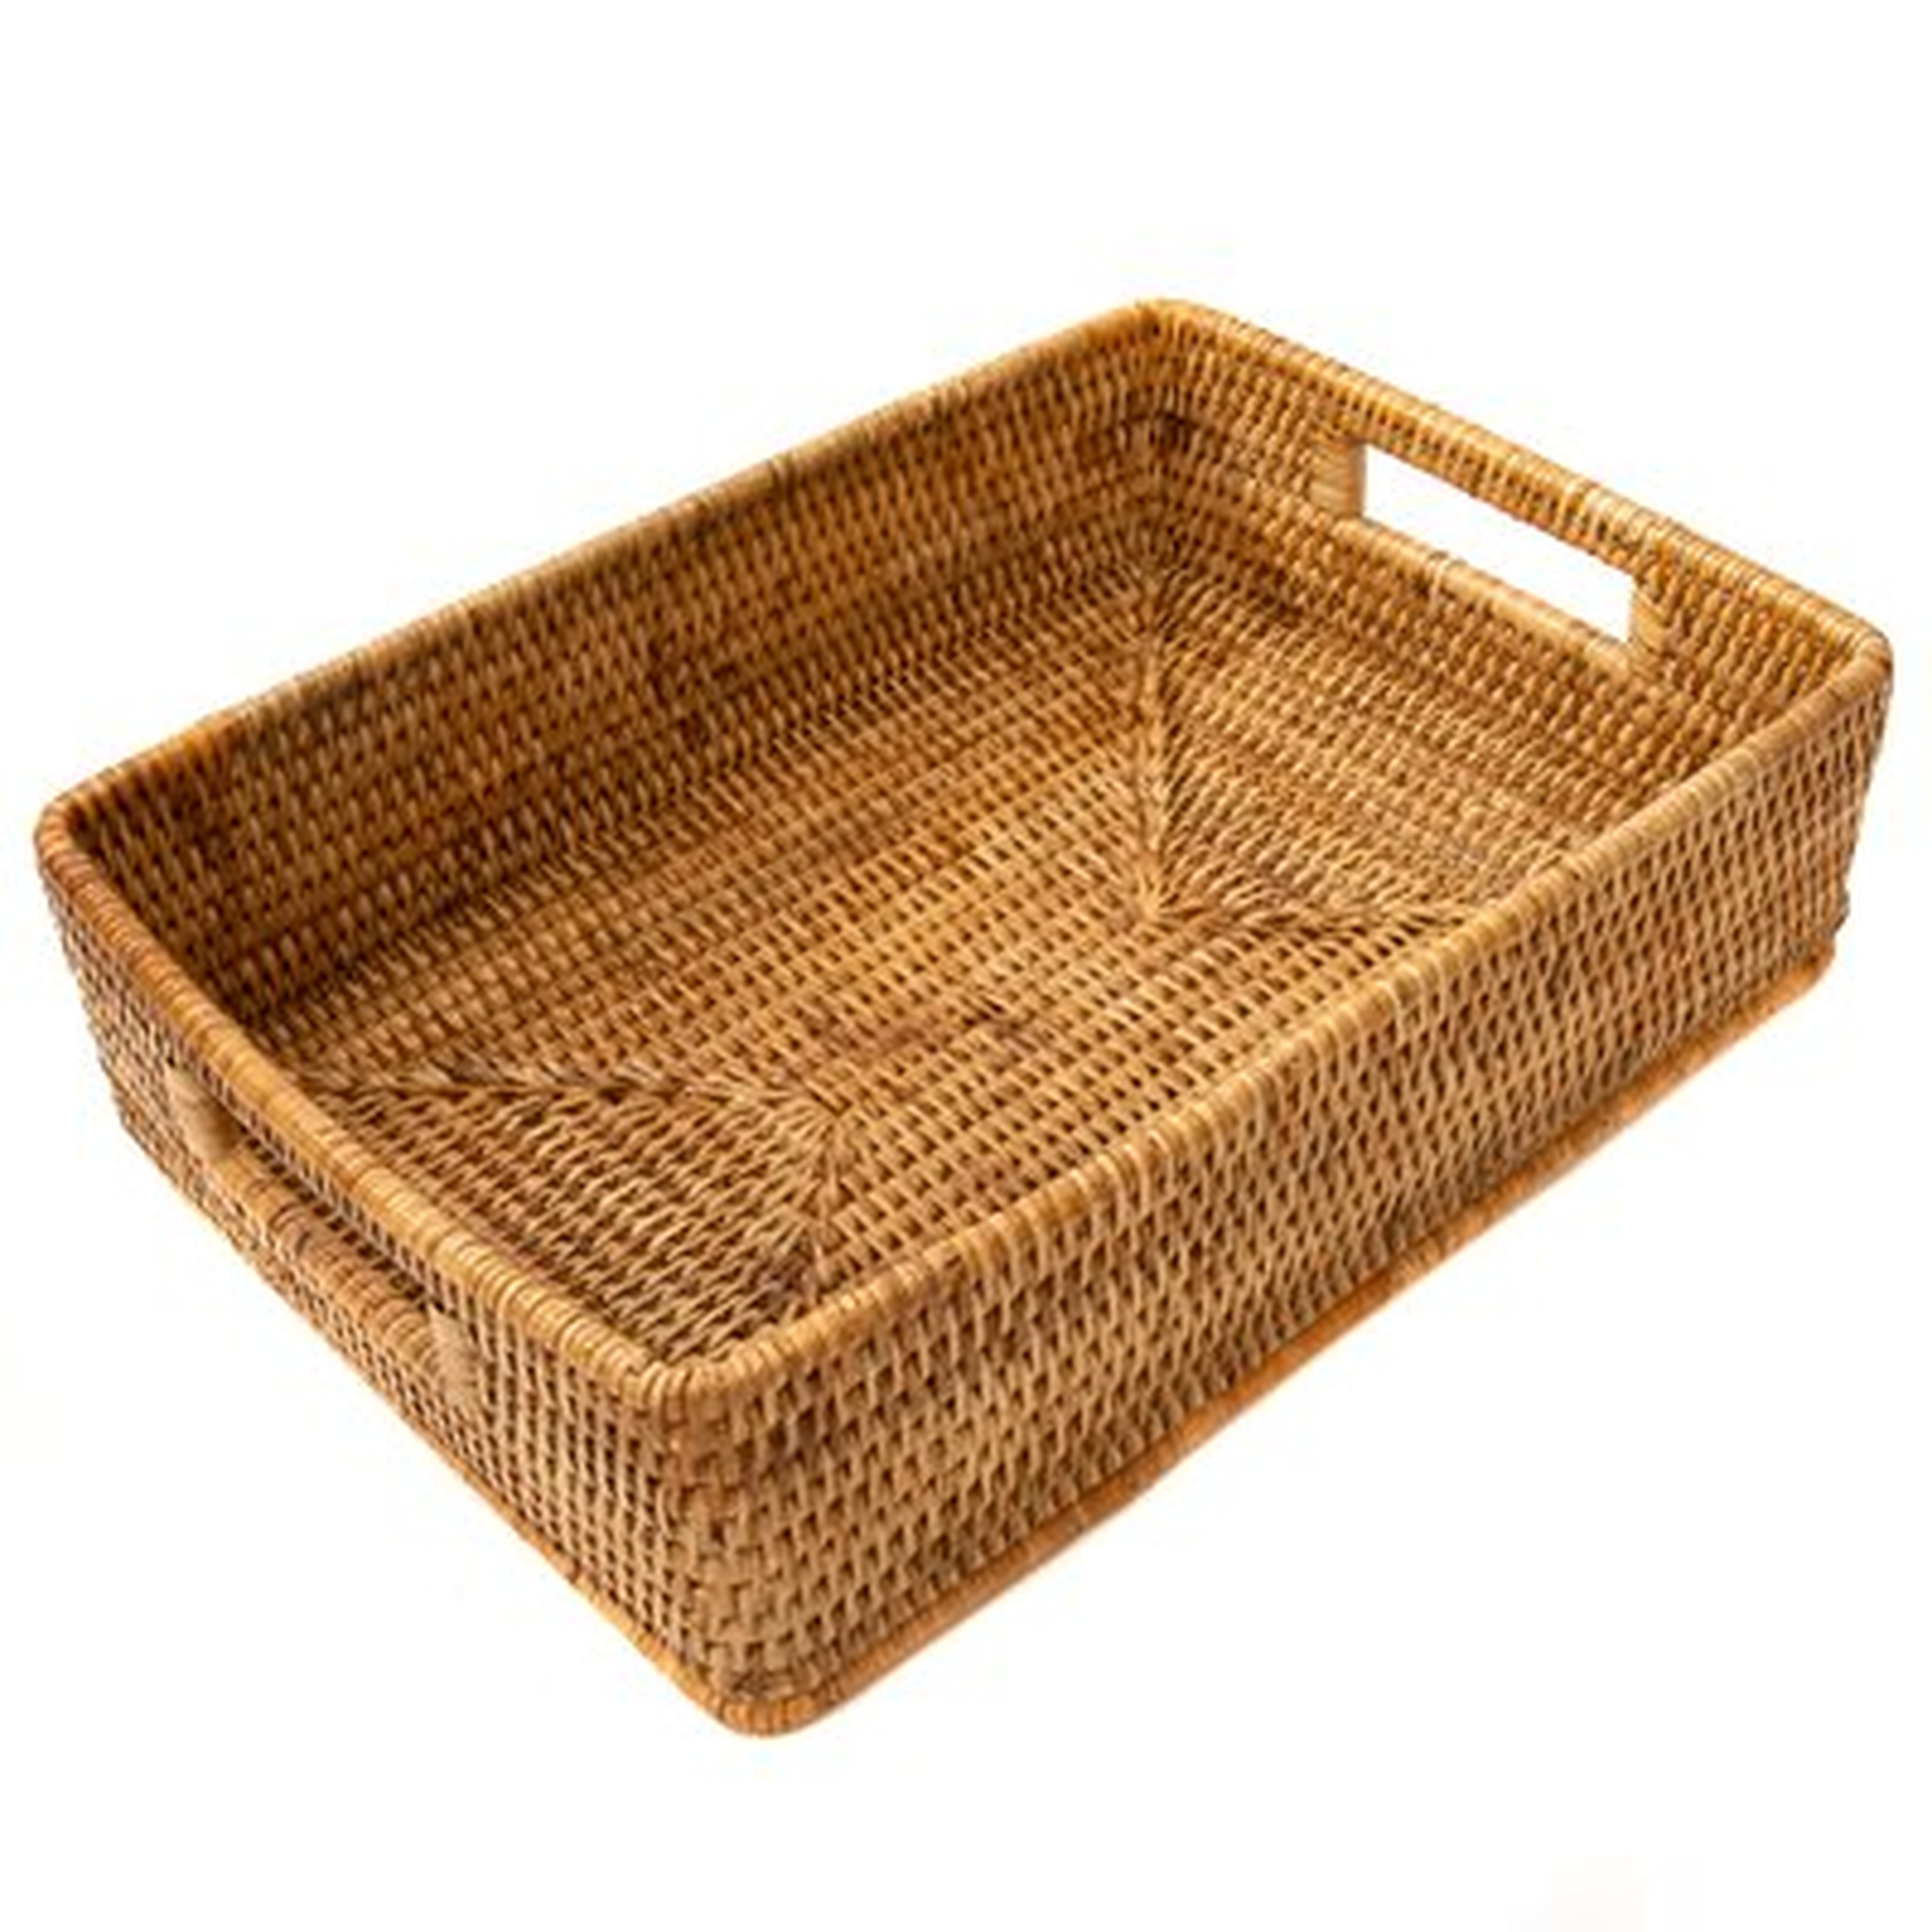 Rattan Rectangular Basket with Rounded Corners and Cutout Handles - Wayfair